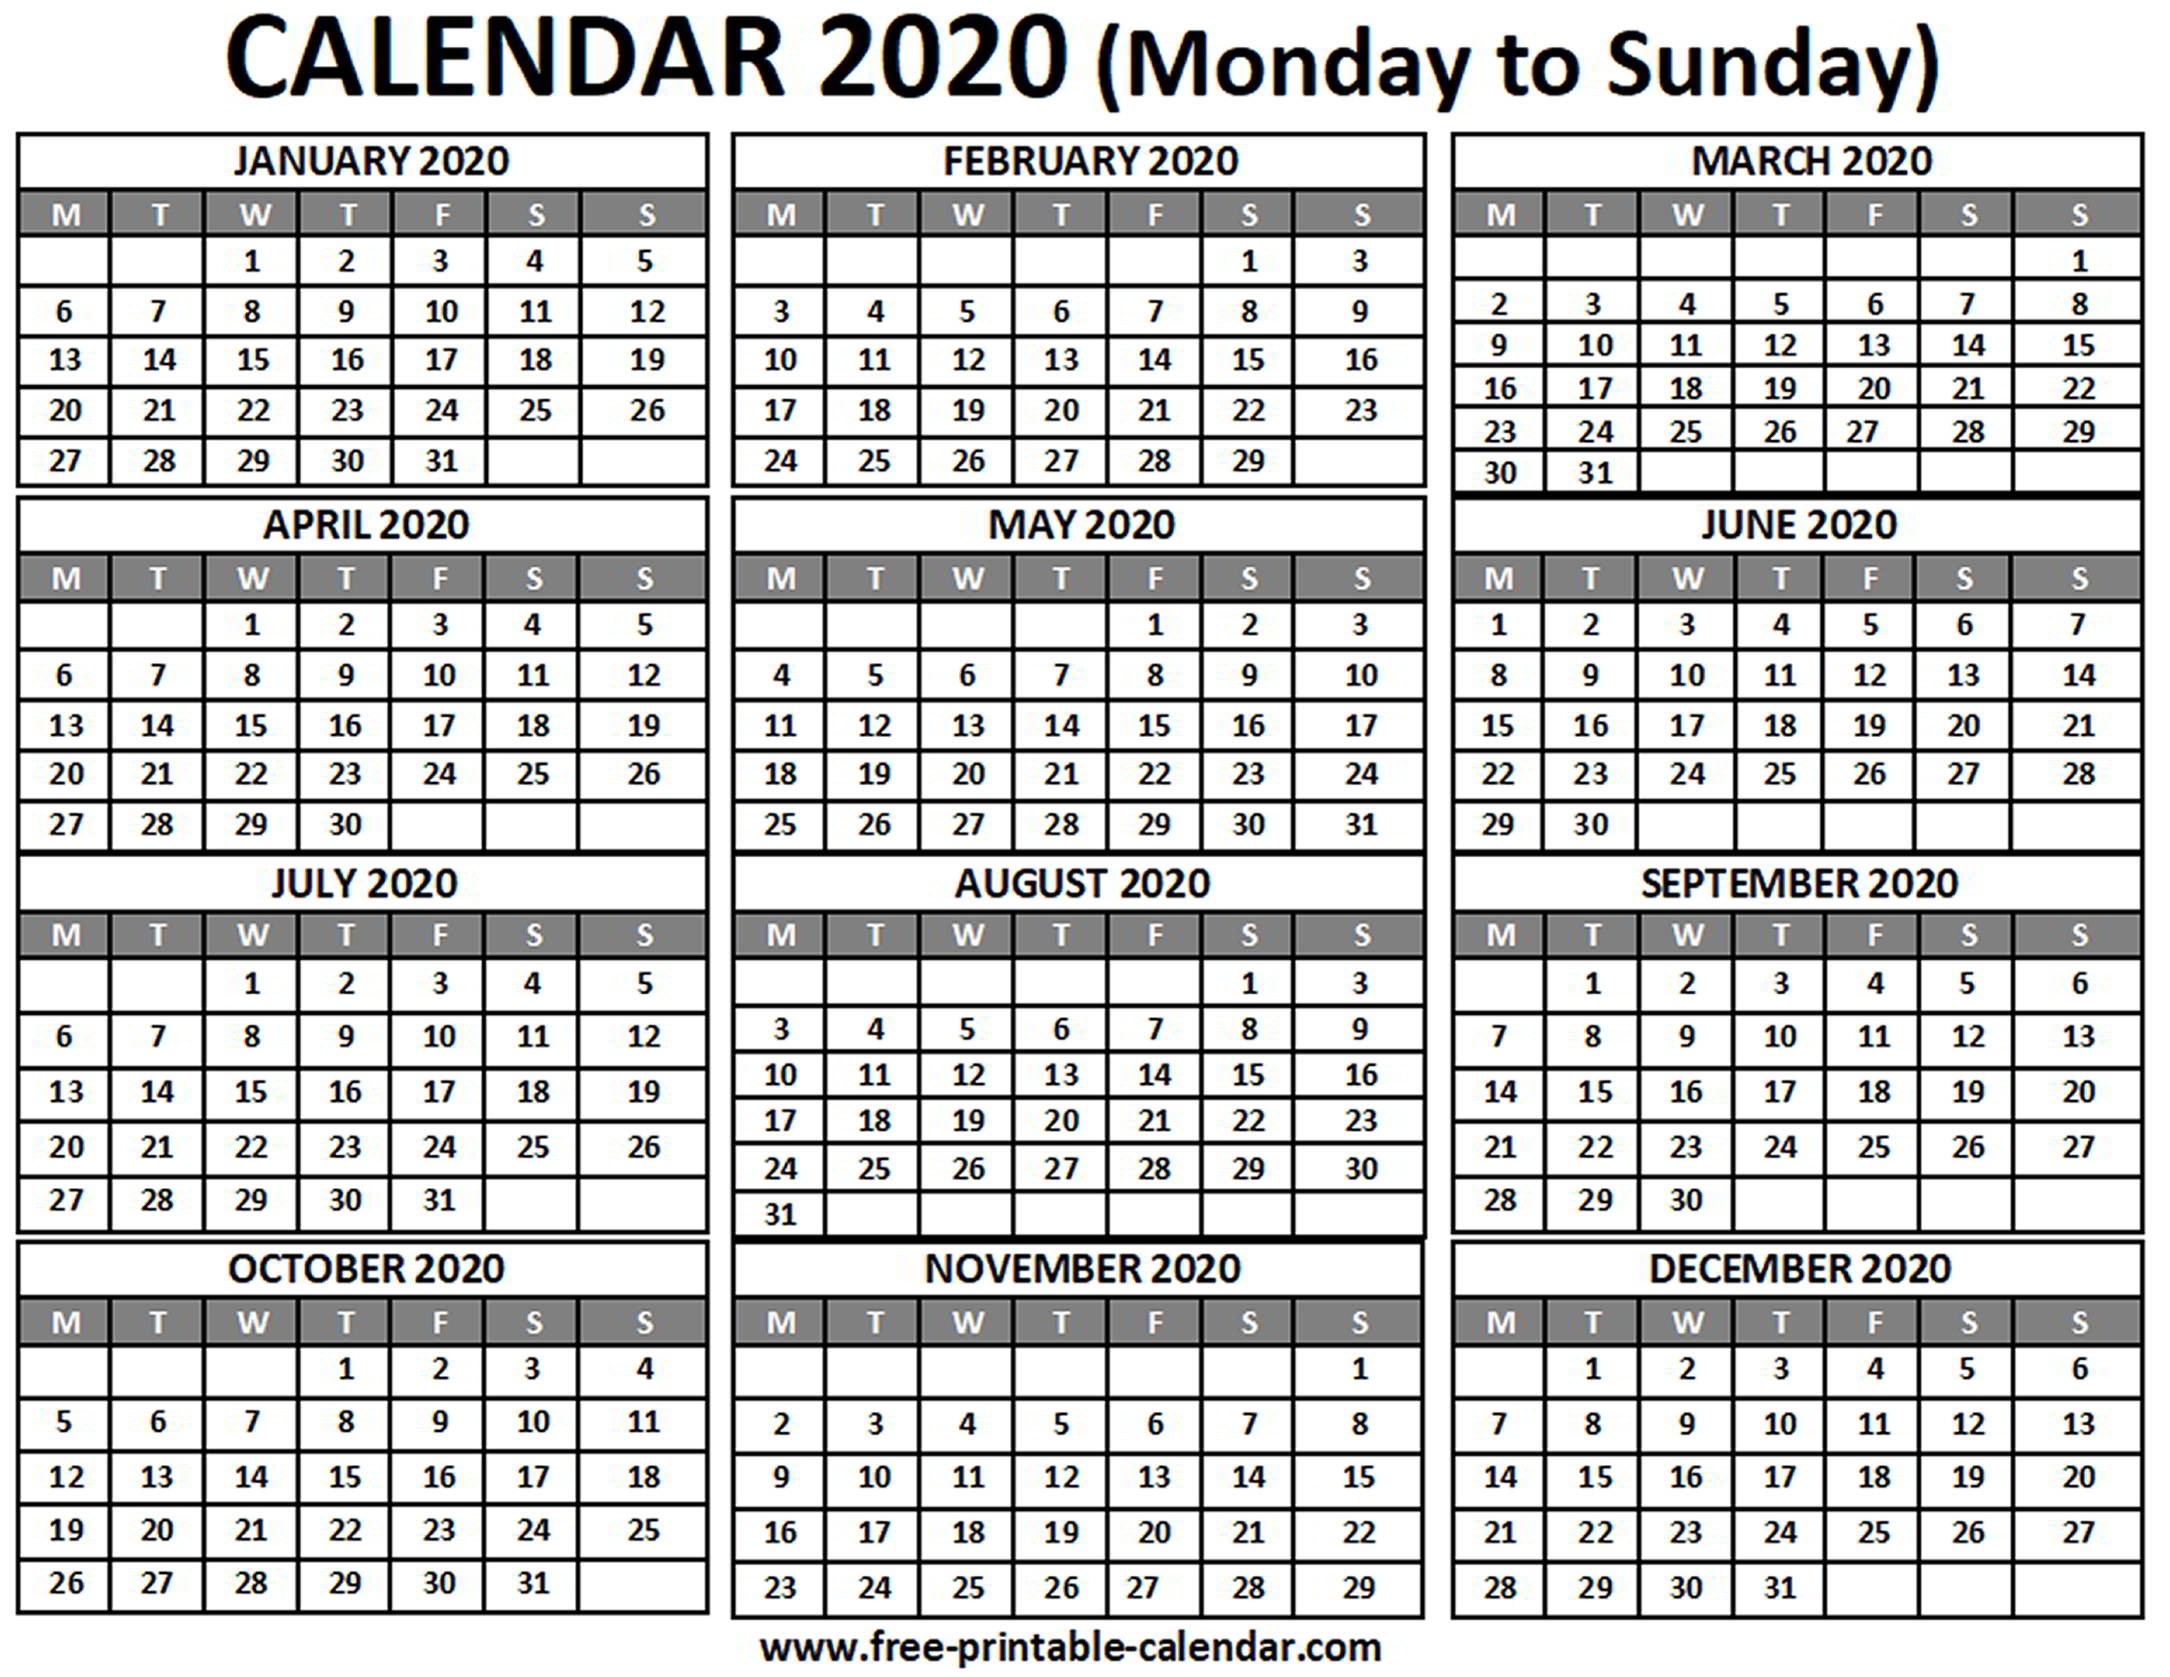 2020 Calendar - Free-Printable-Calendar-2020 Calendar Templates Monday - Sunday